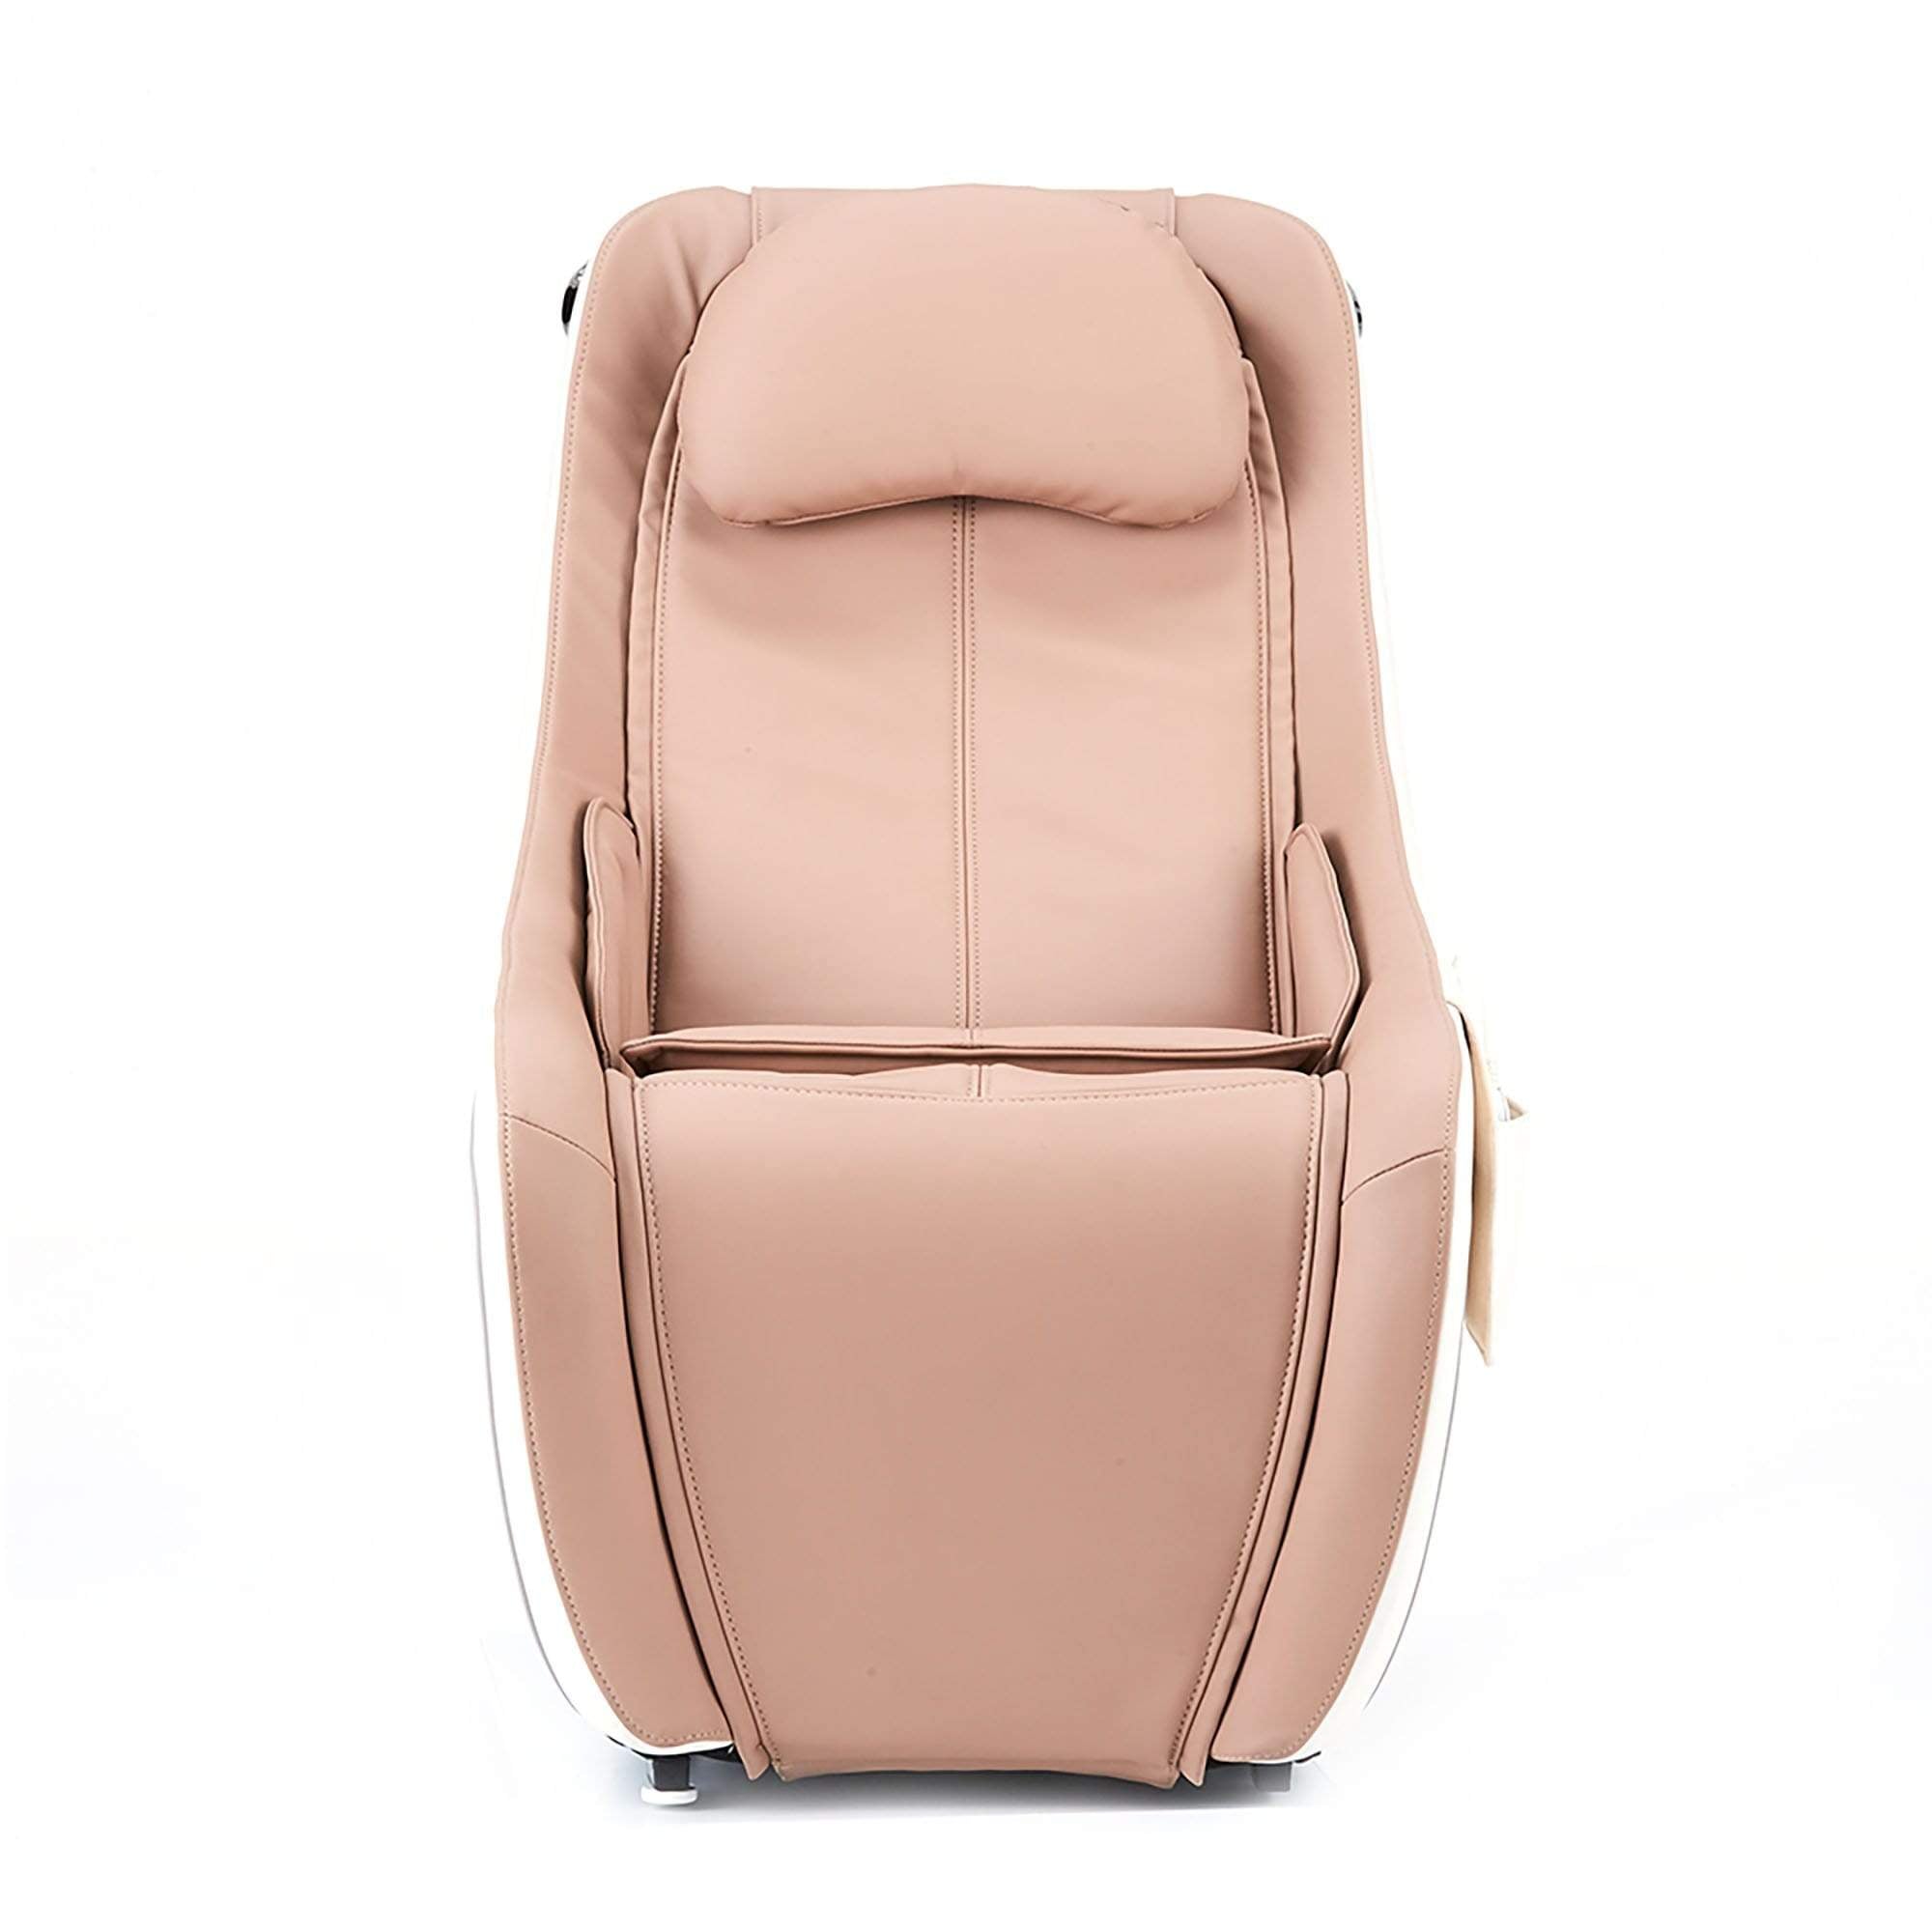 Synca Massage Chair Synca CirC Premium SL Track Heated Massage Chair SMR0004-11NA